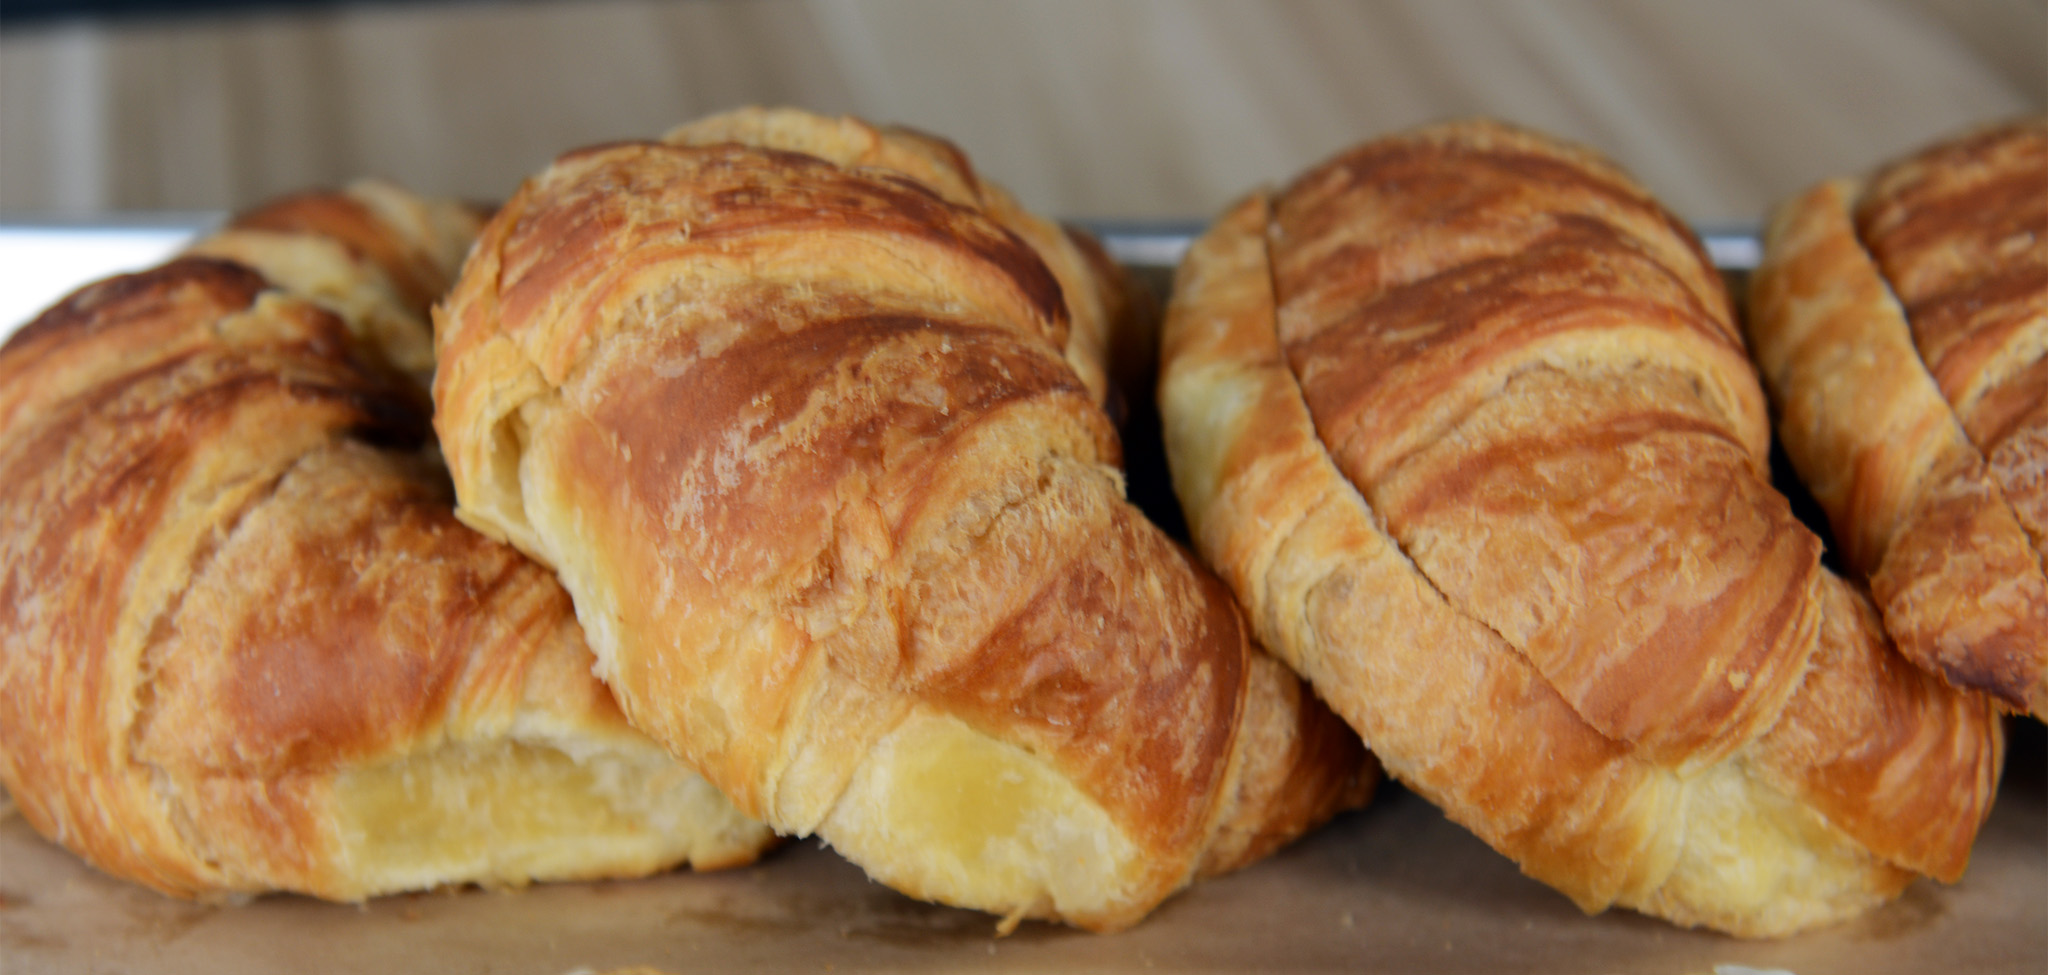 Warm croissants ara perfect for breakfast!